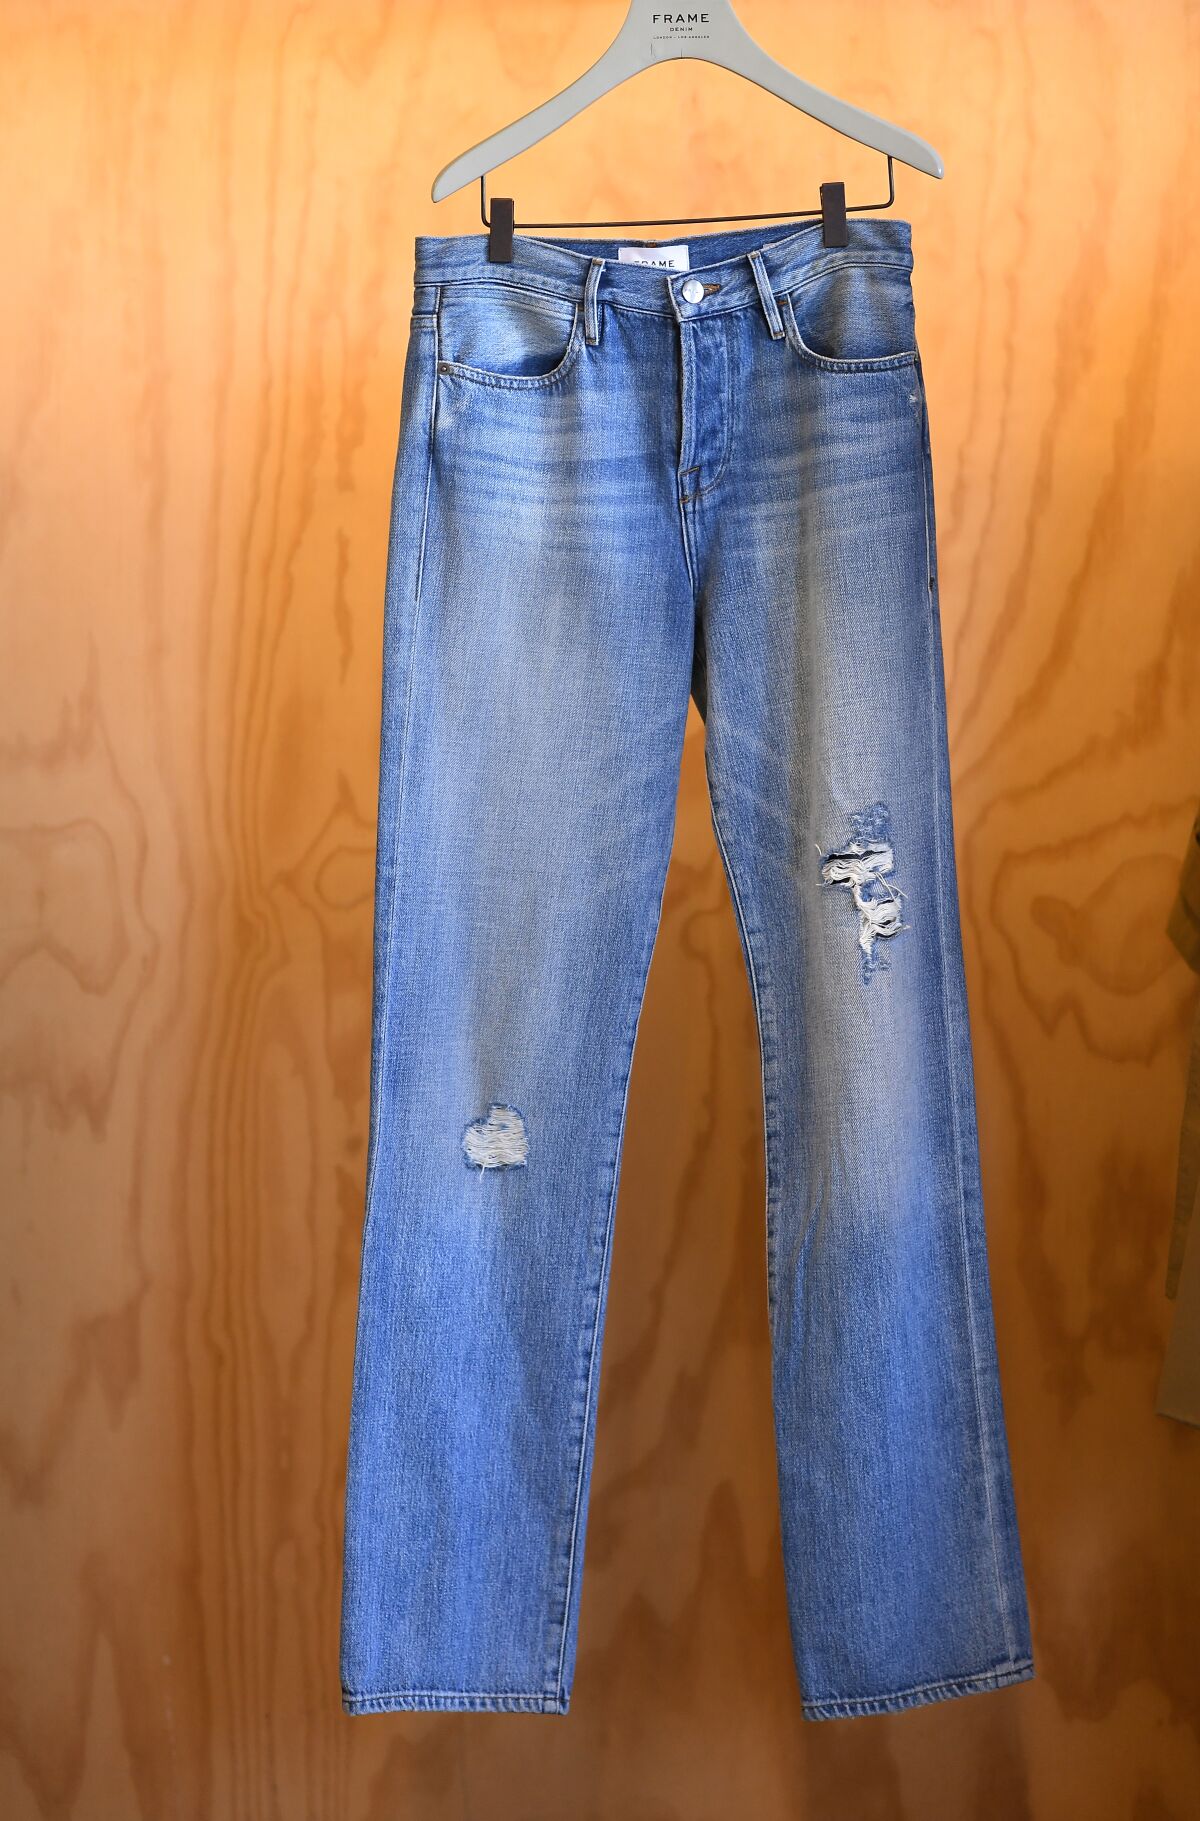 Frame jeans